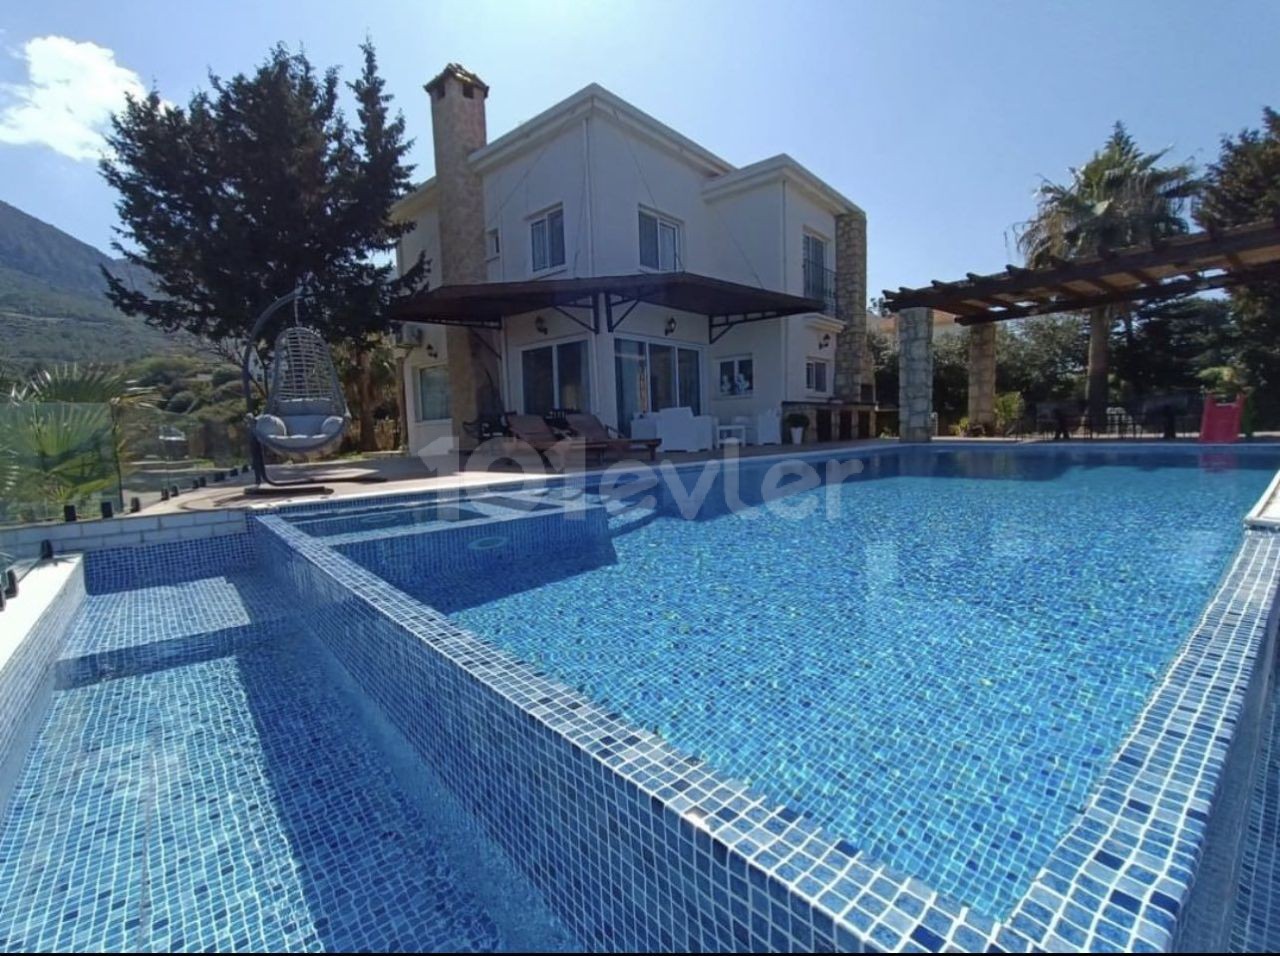 Peaceful Villa in Zeytinlik, the Most Special Region of Kyrenia! Villa Promising Peace and Tranquility in Zeytinlik, Kyrenia's Most Special Area!